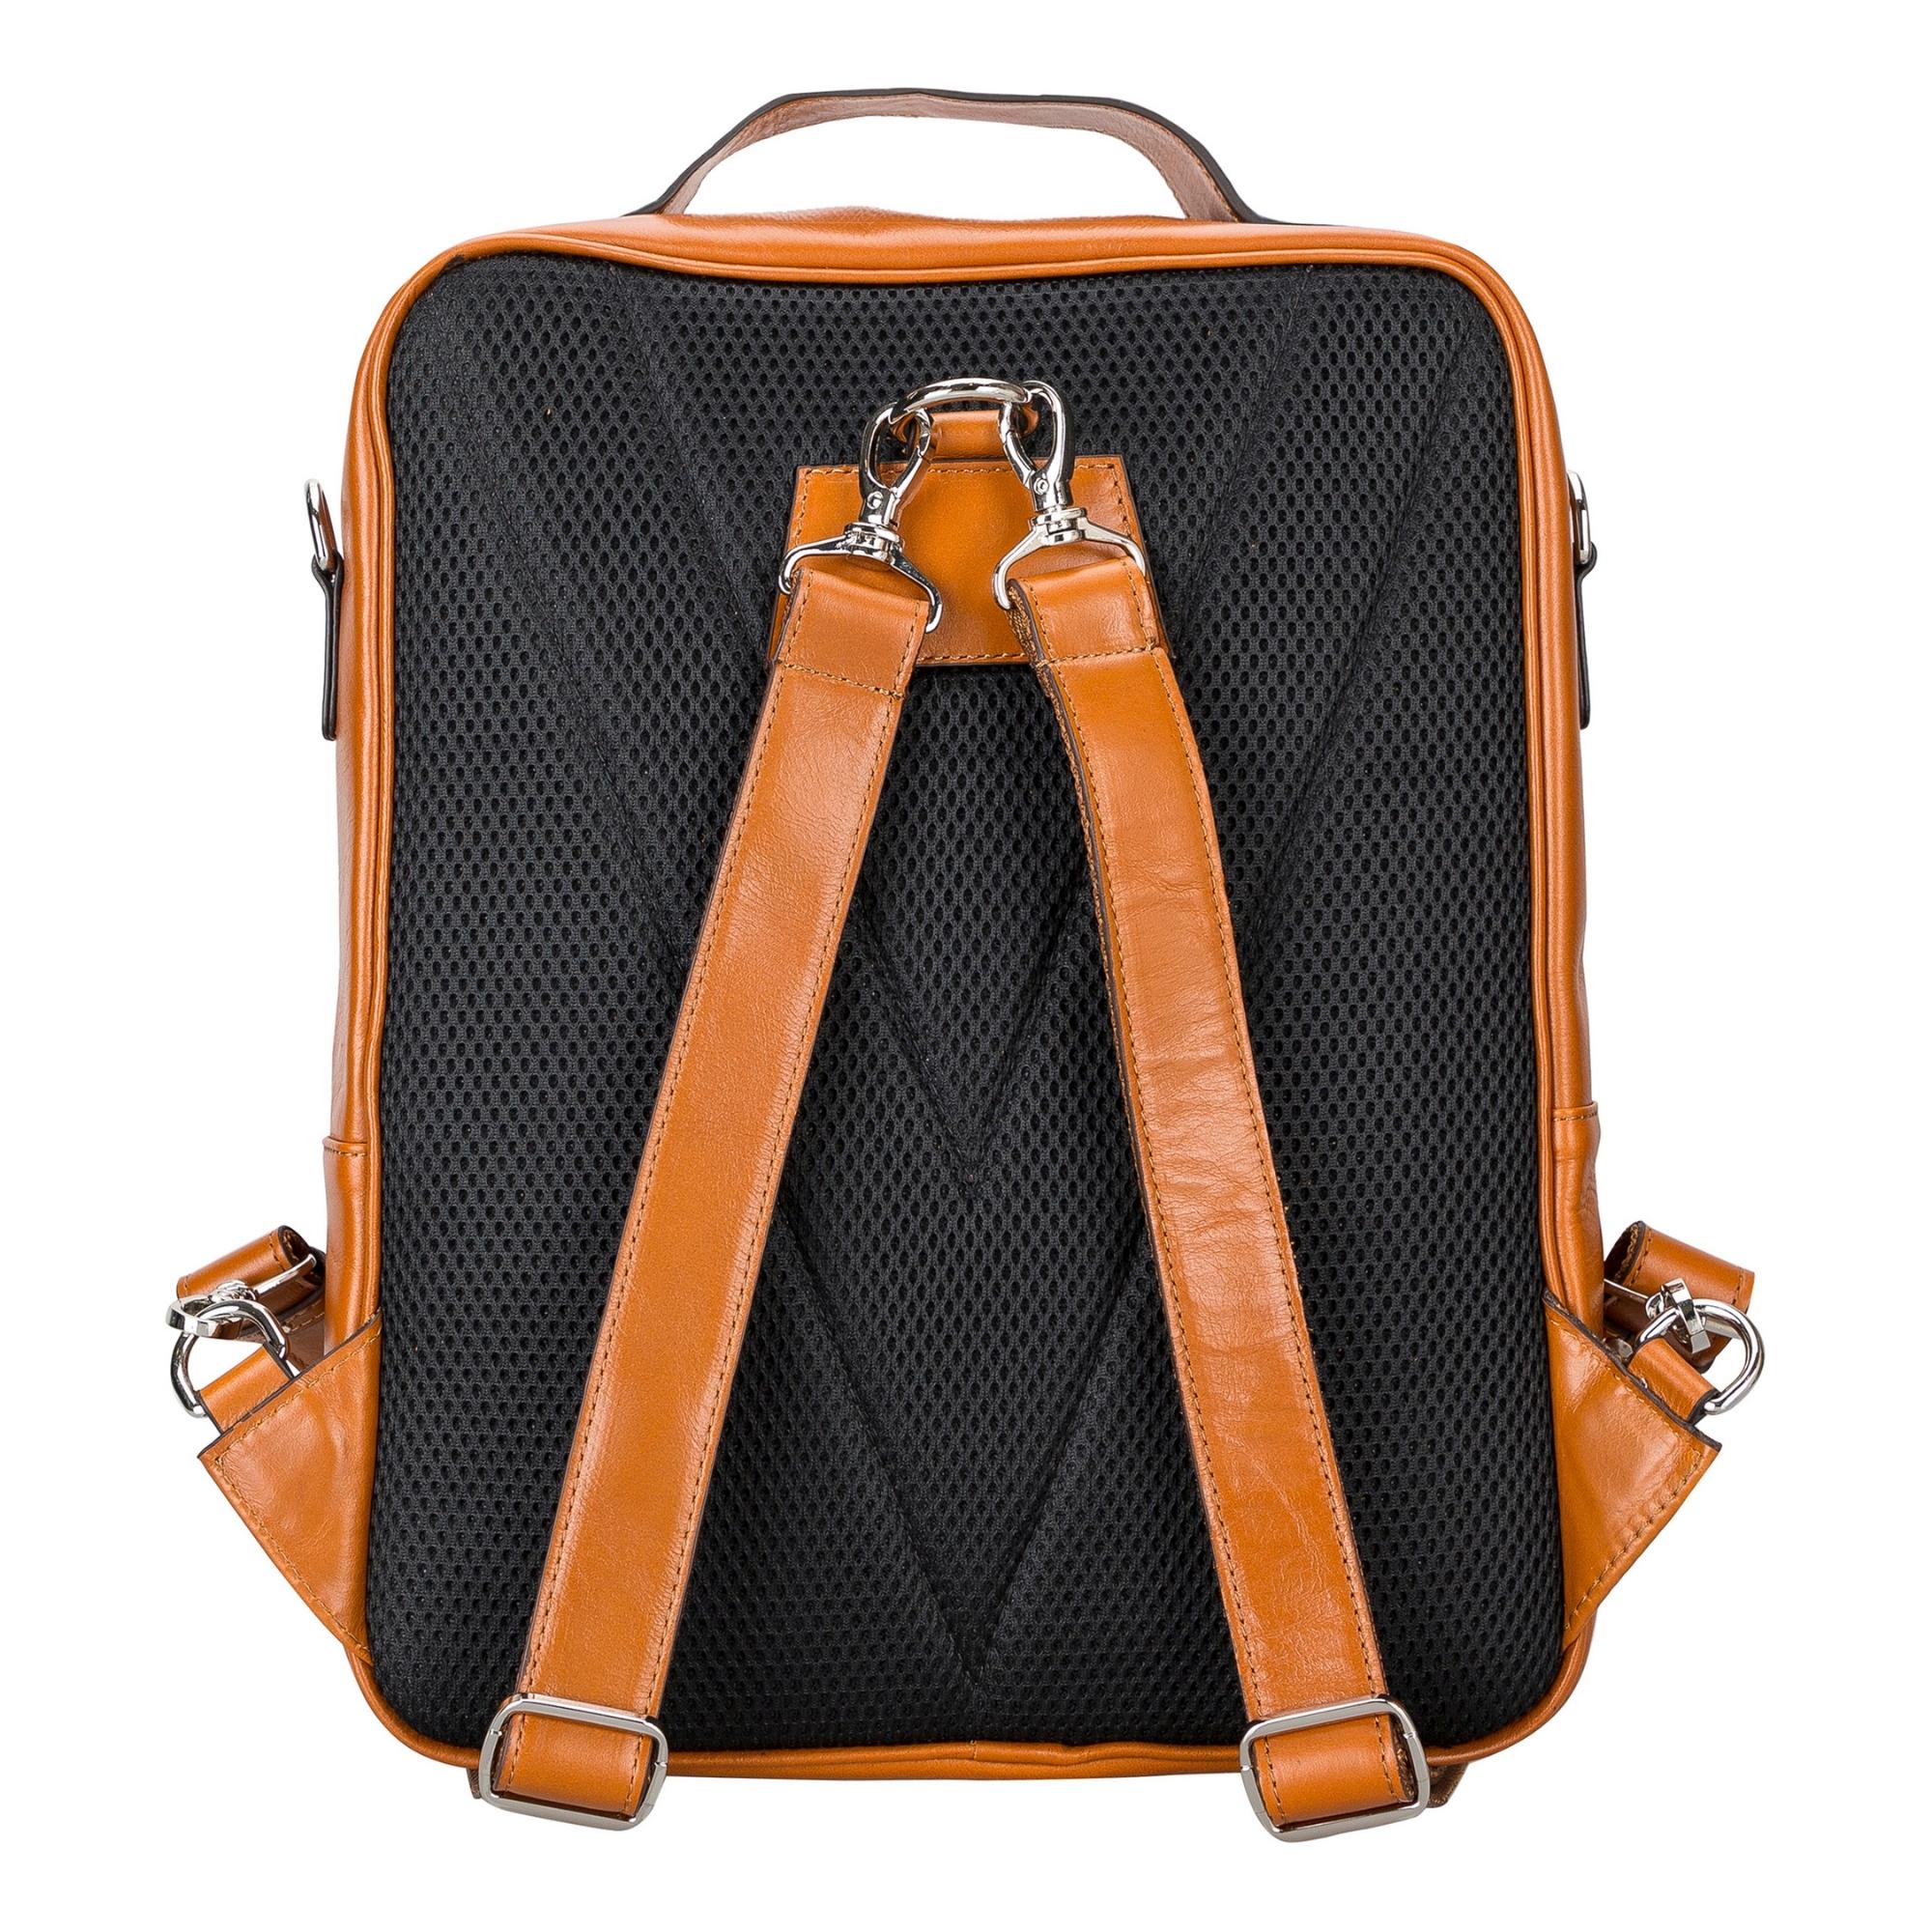 Elmira Leather Laptop Backpack for Men and Women - Tan - TORONATA